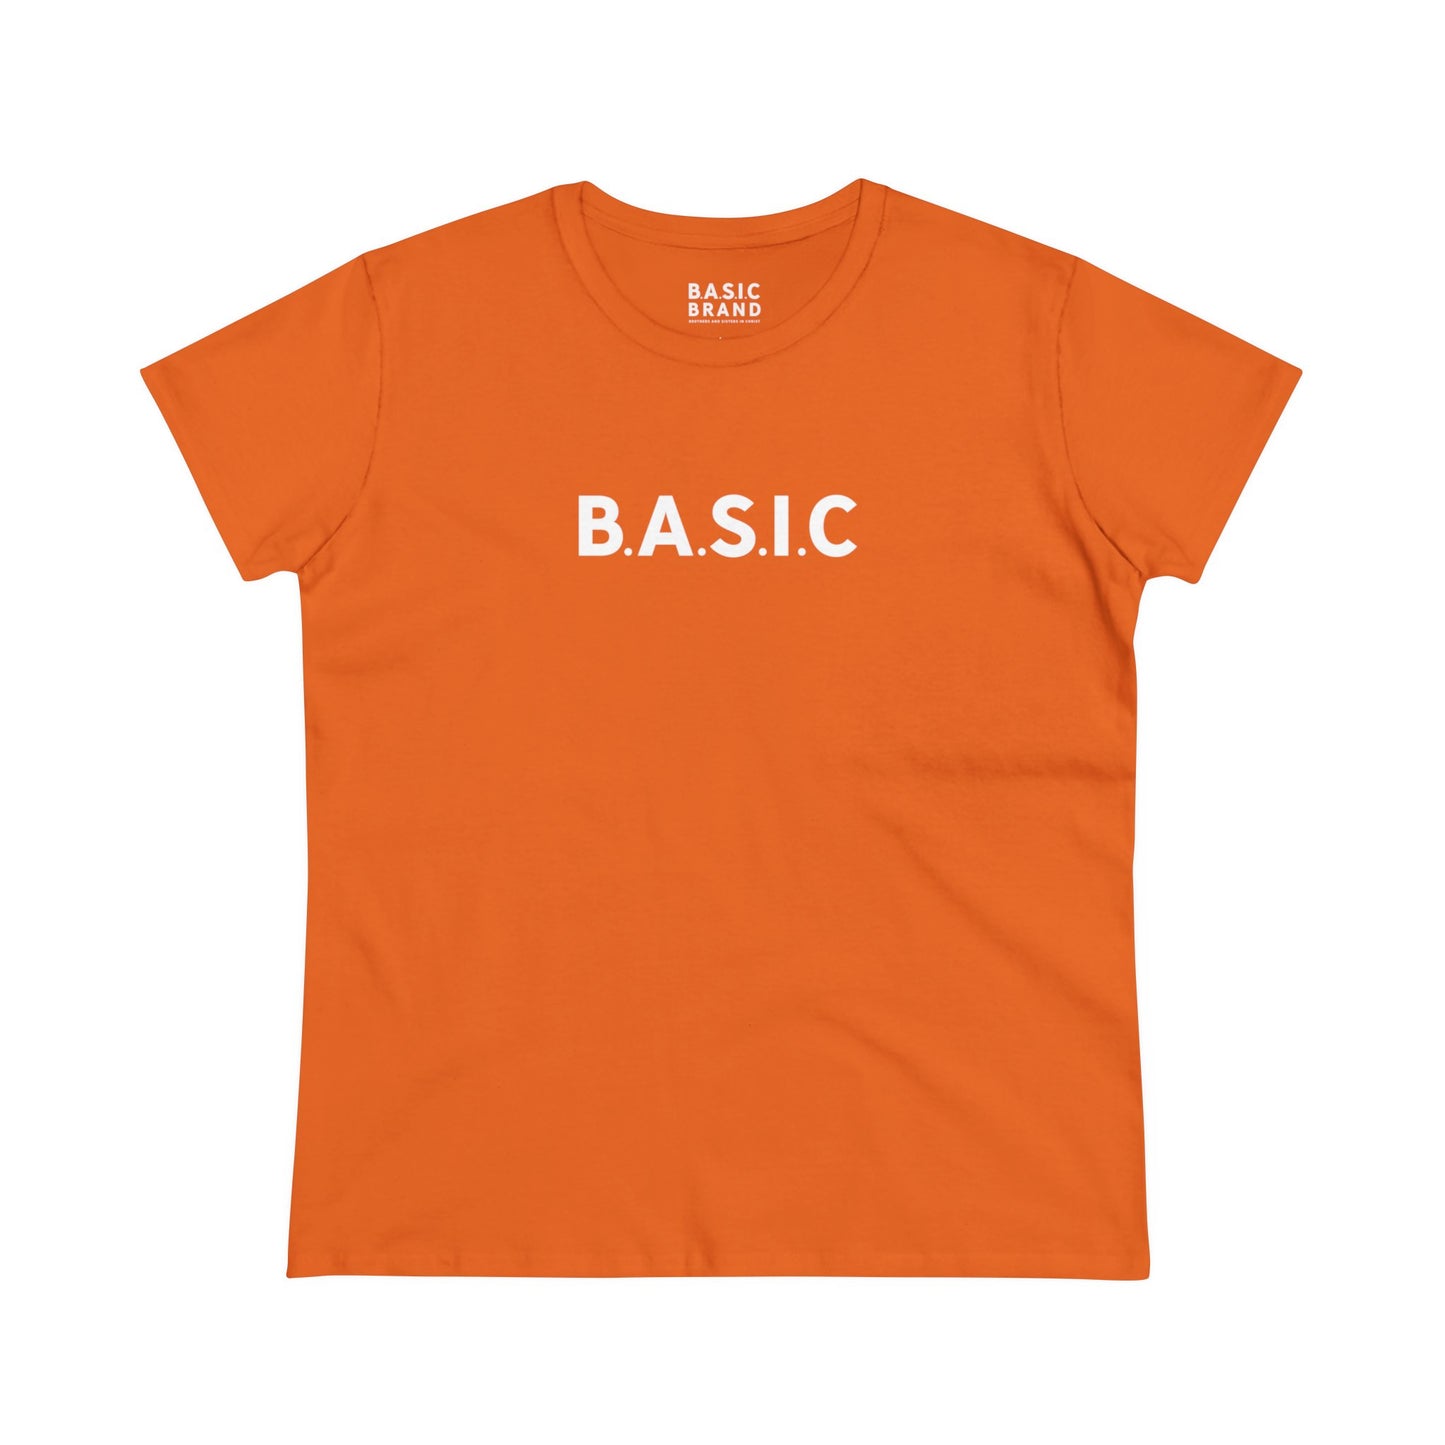 Women's B.A.S.I.C "Medium Sized Logo" White Font Tee Shirt